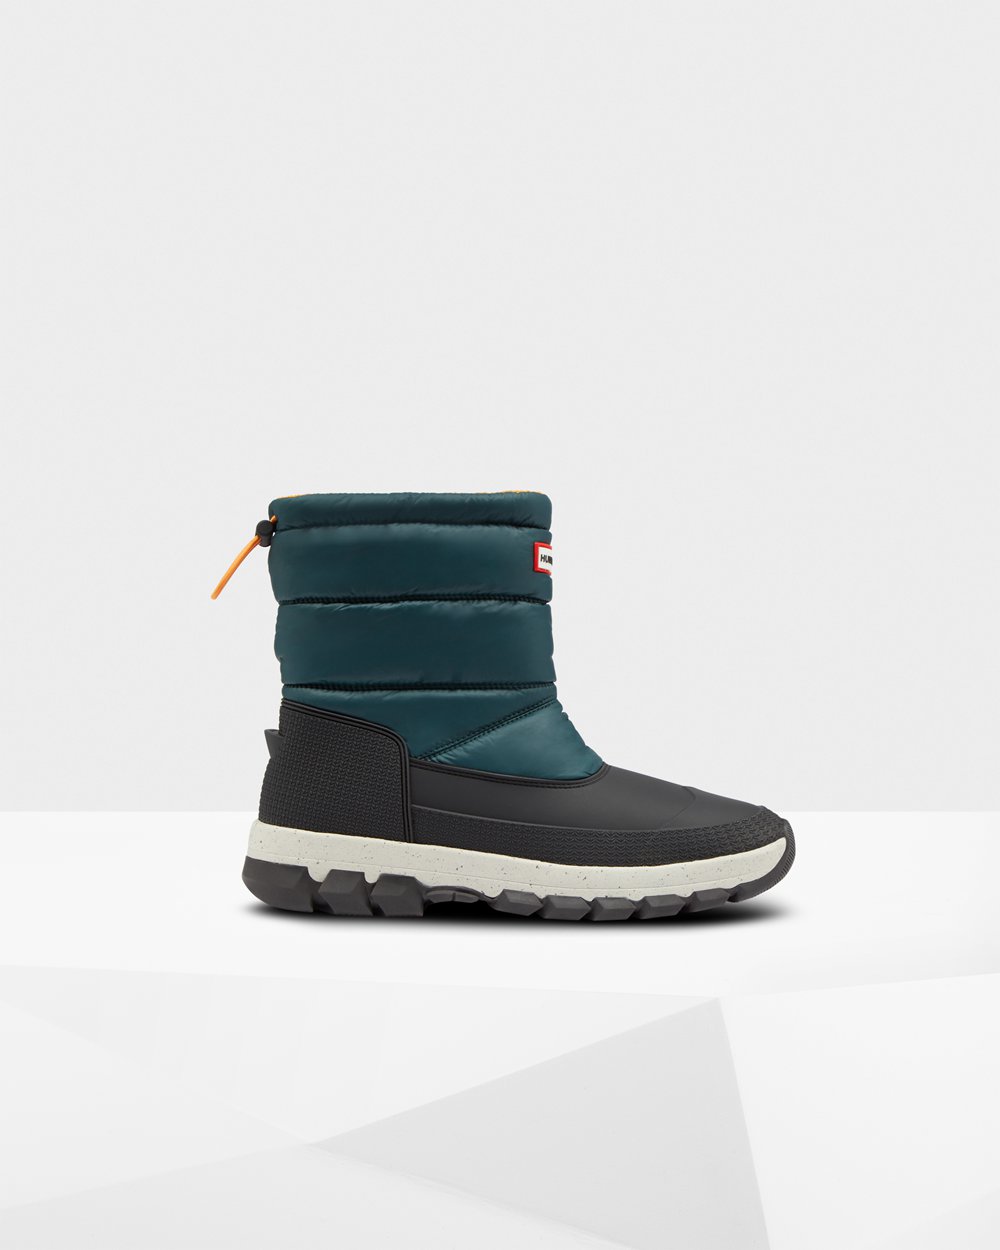 Mens Snow Boots - Hunter Original Insulated Short (90ACVSMFD) - Green/Grey